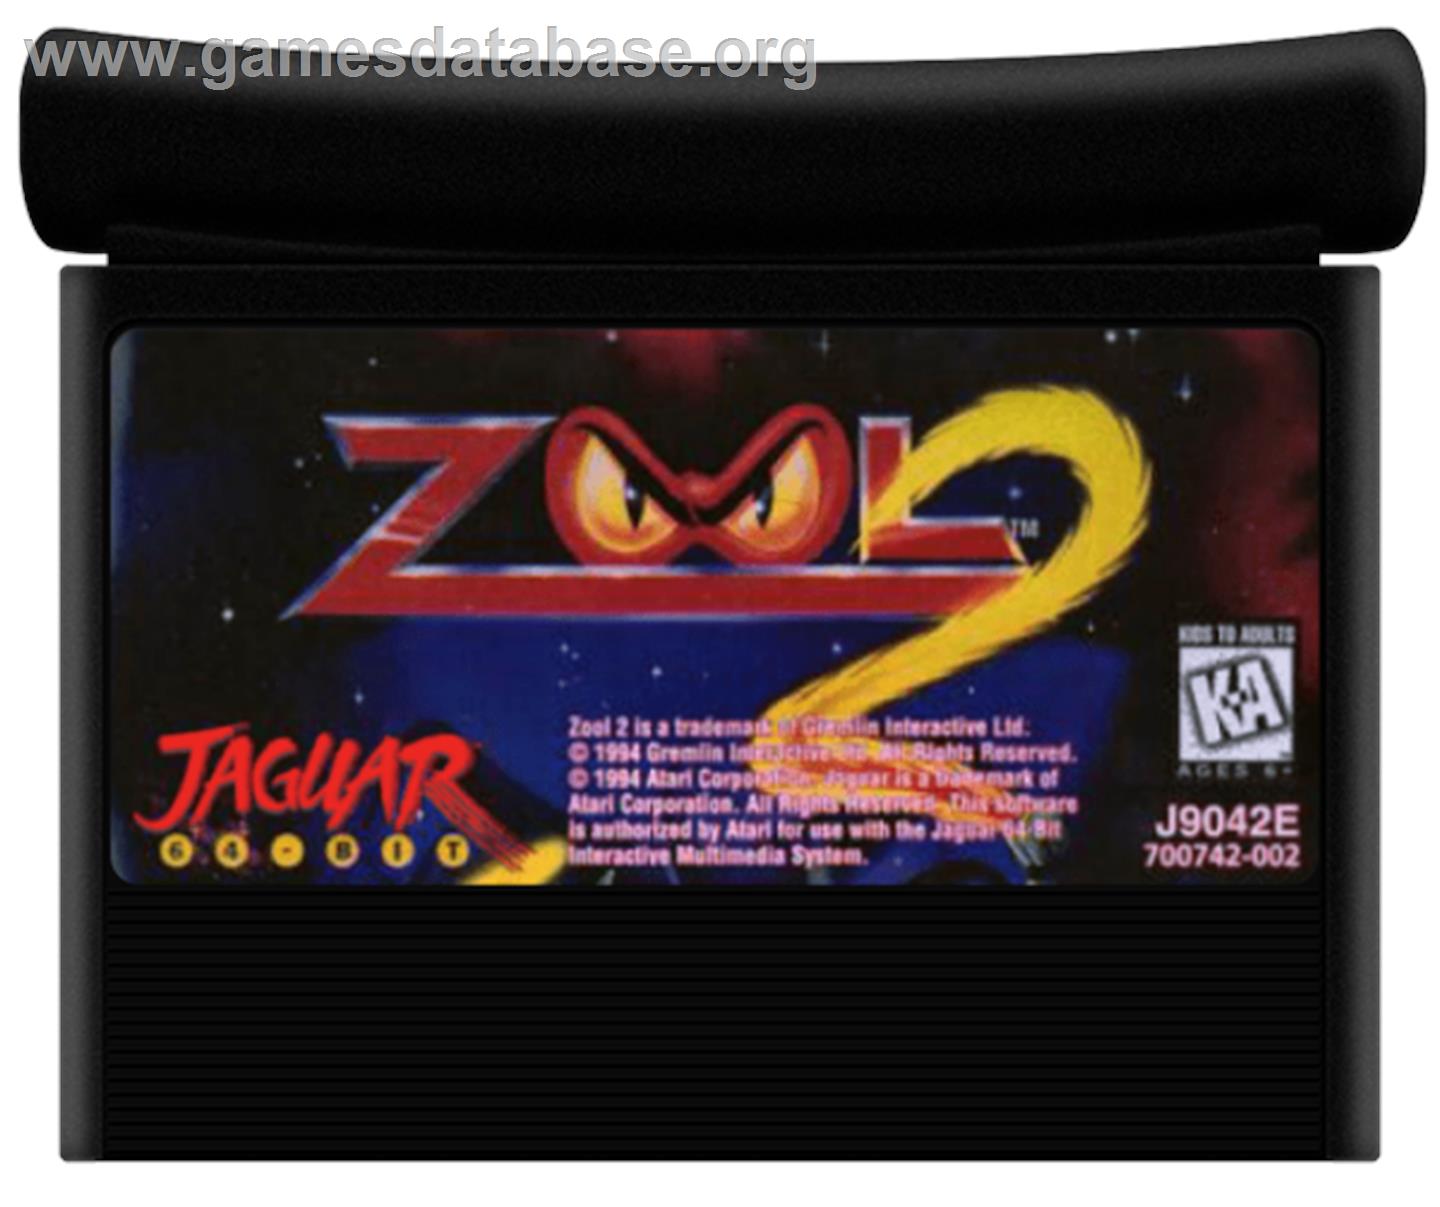 Zool 2 - Atari Jaguar - Artwork - Cartridge